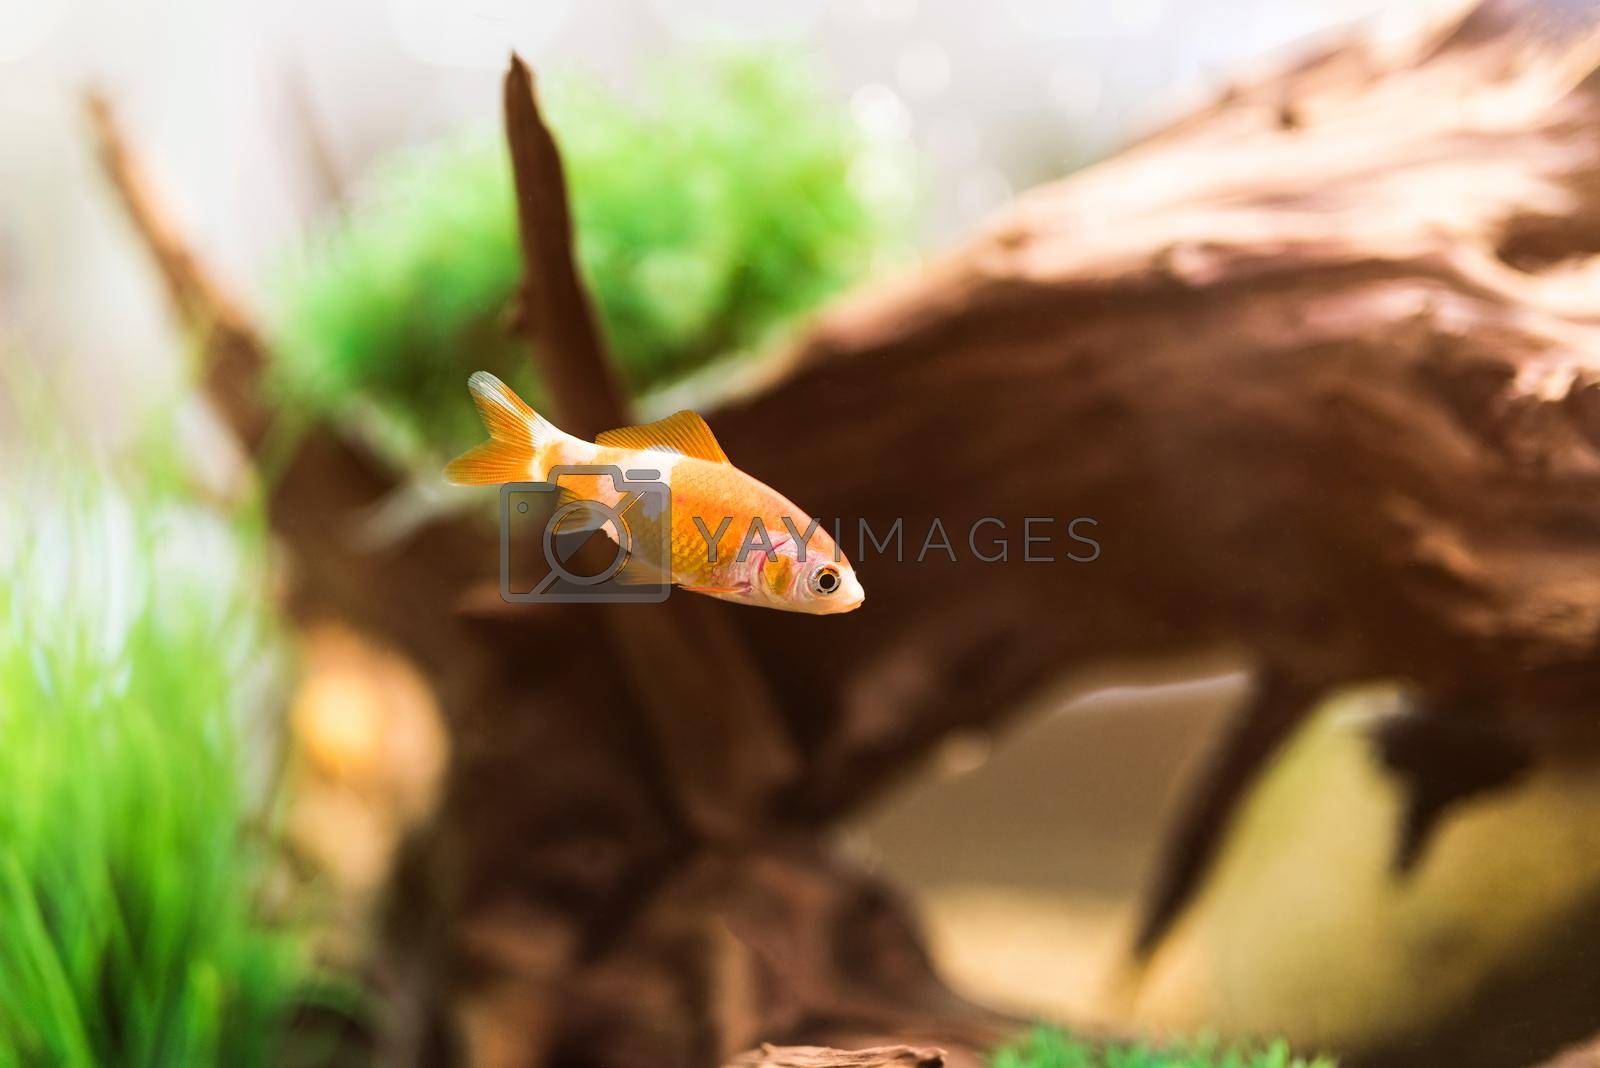 Royalty free image of single golden fish in aquarium by GekaSkr